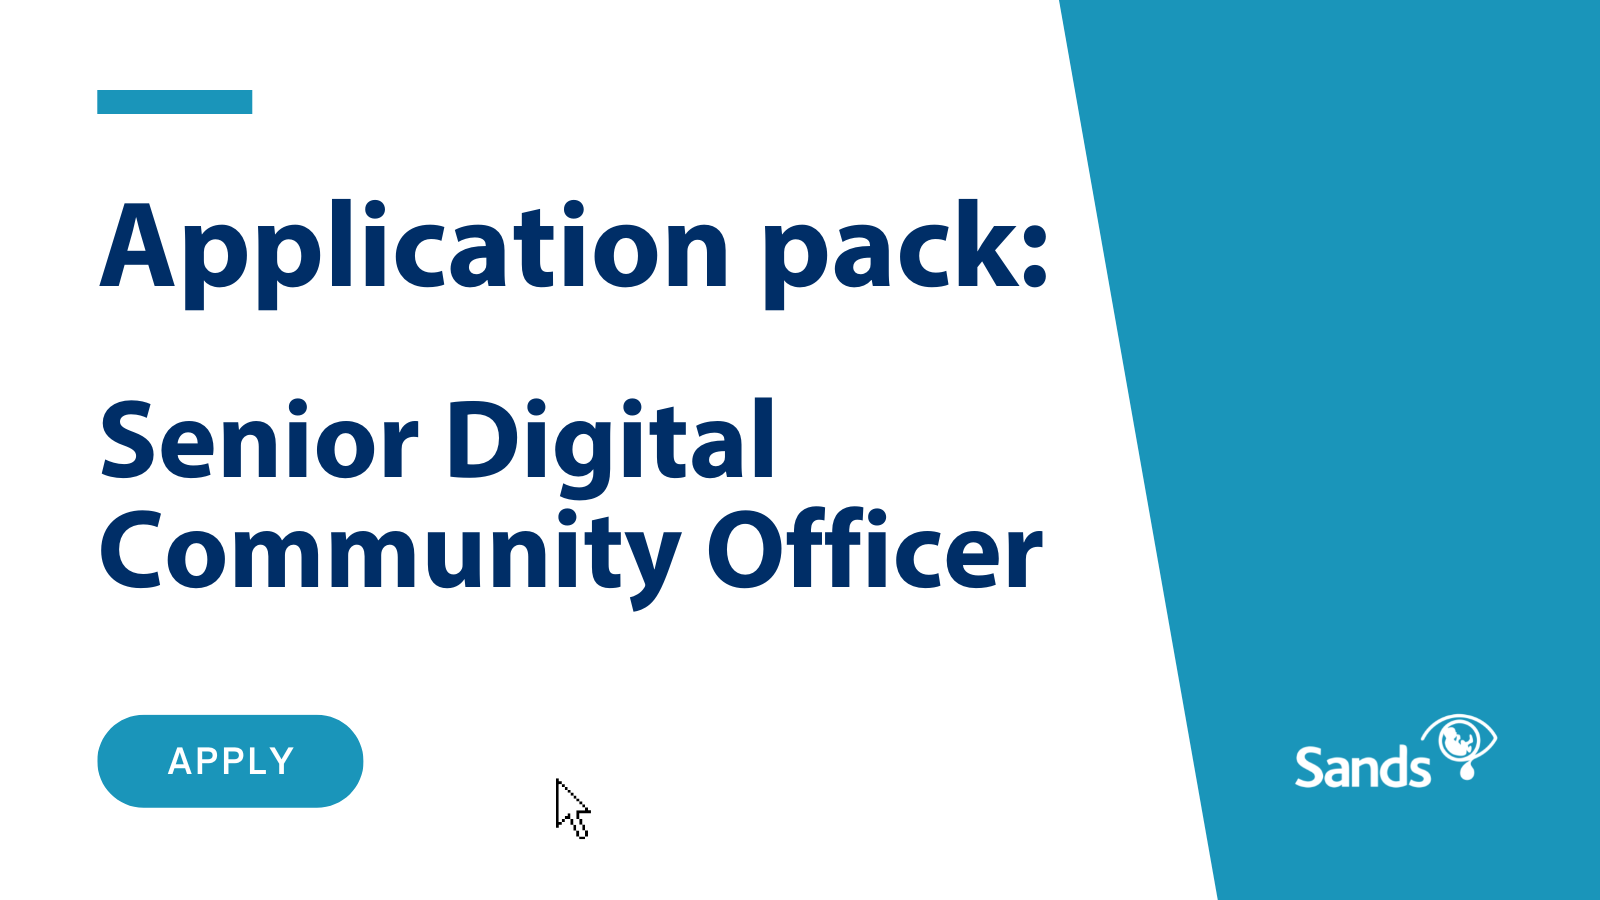 Application pack: Senior Digital Community Officer